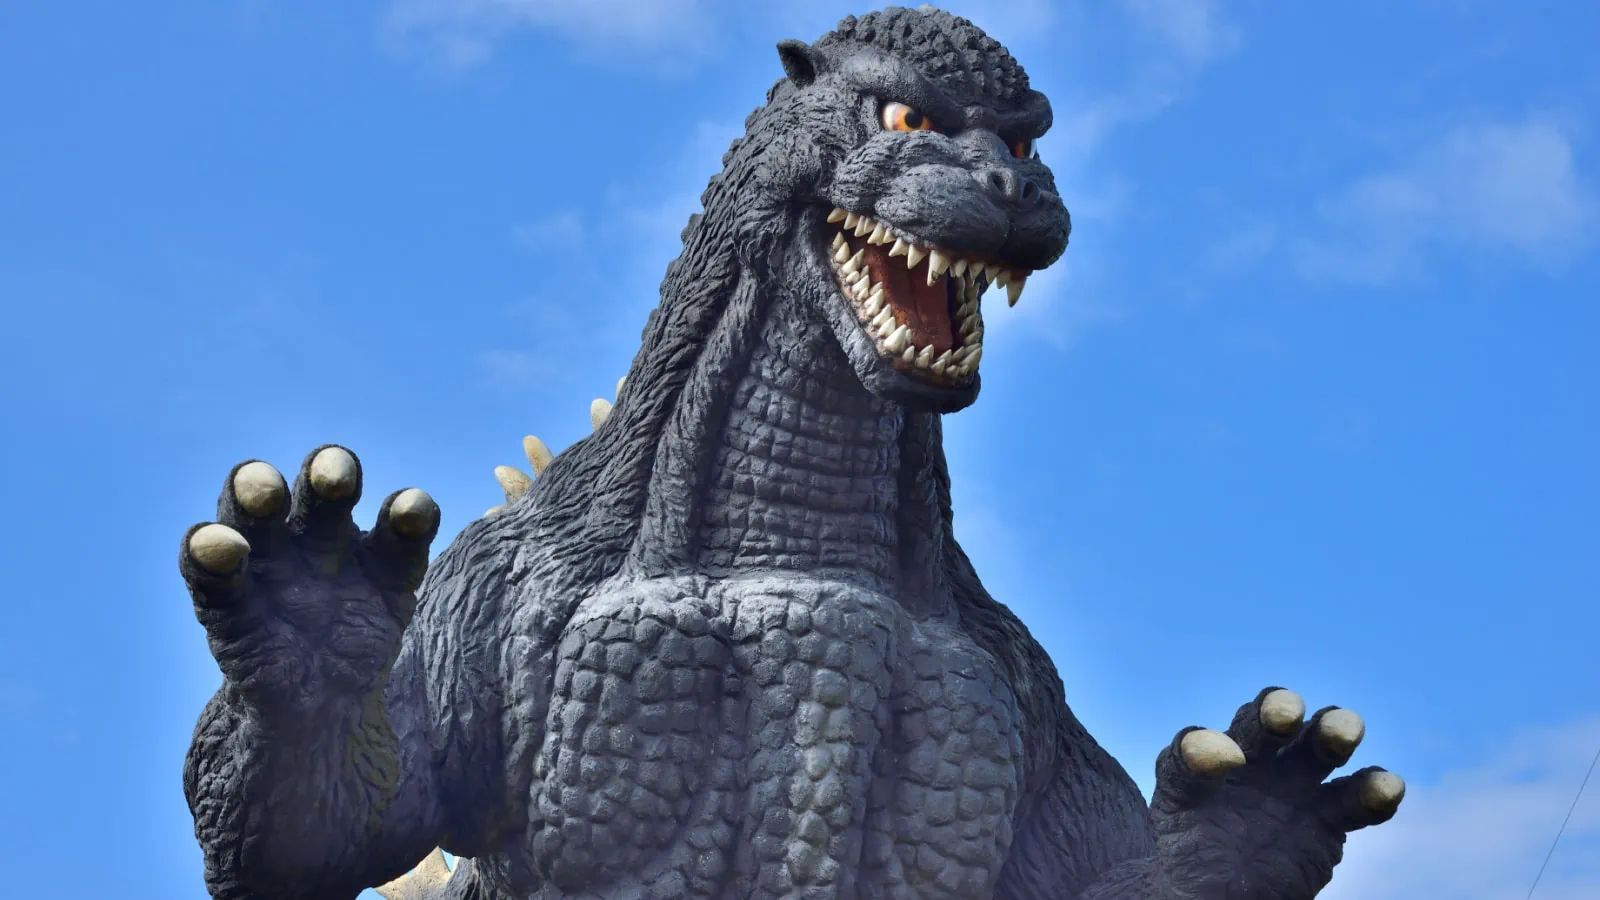 Godzilla statue in Japan